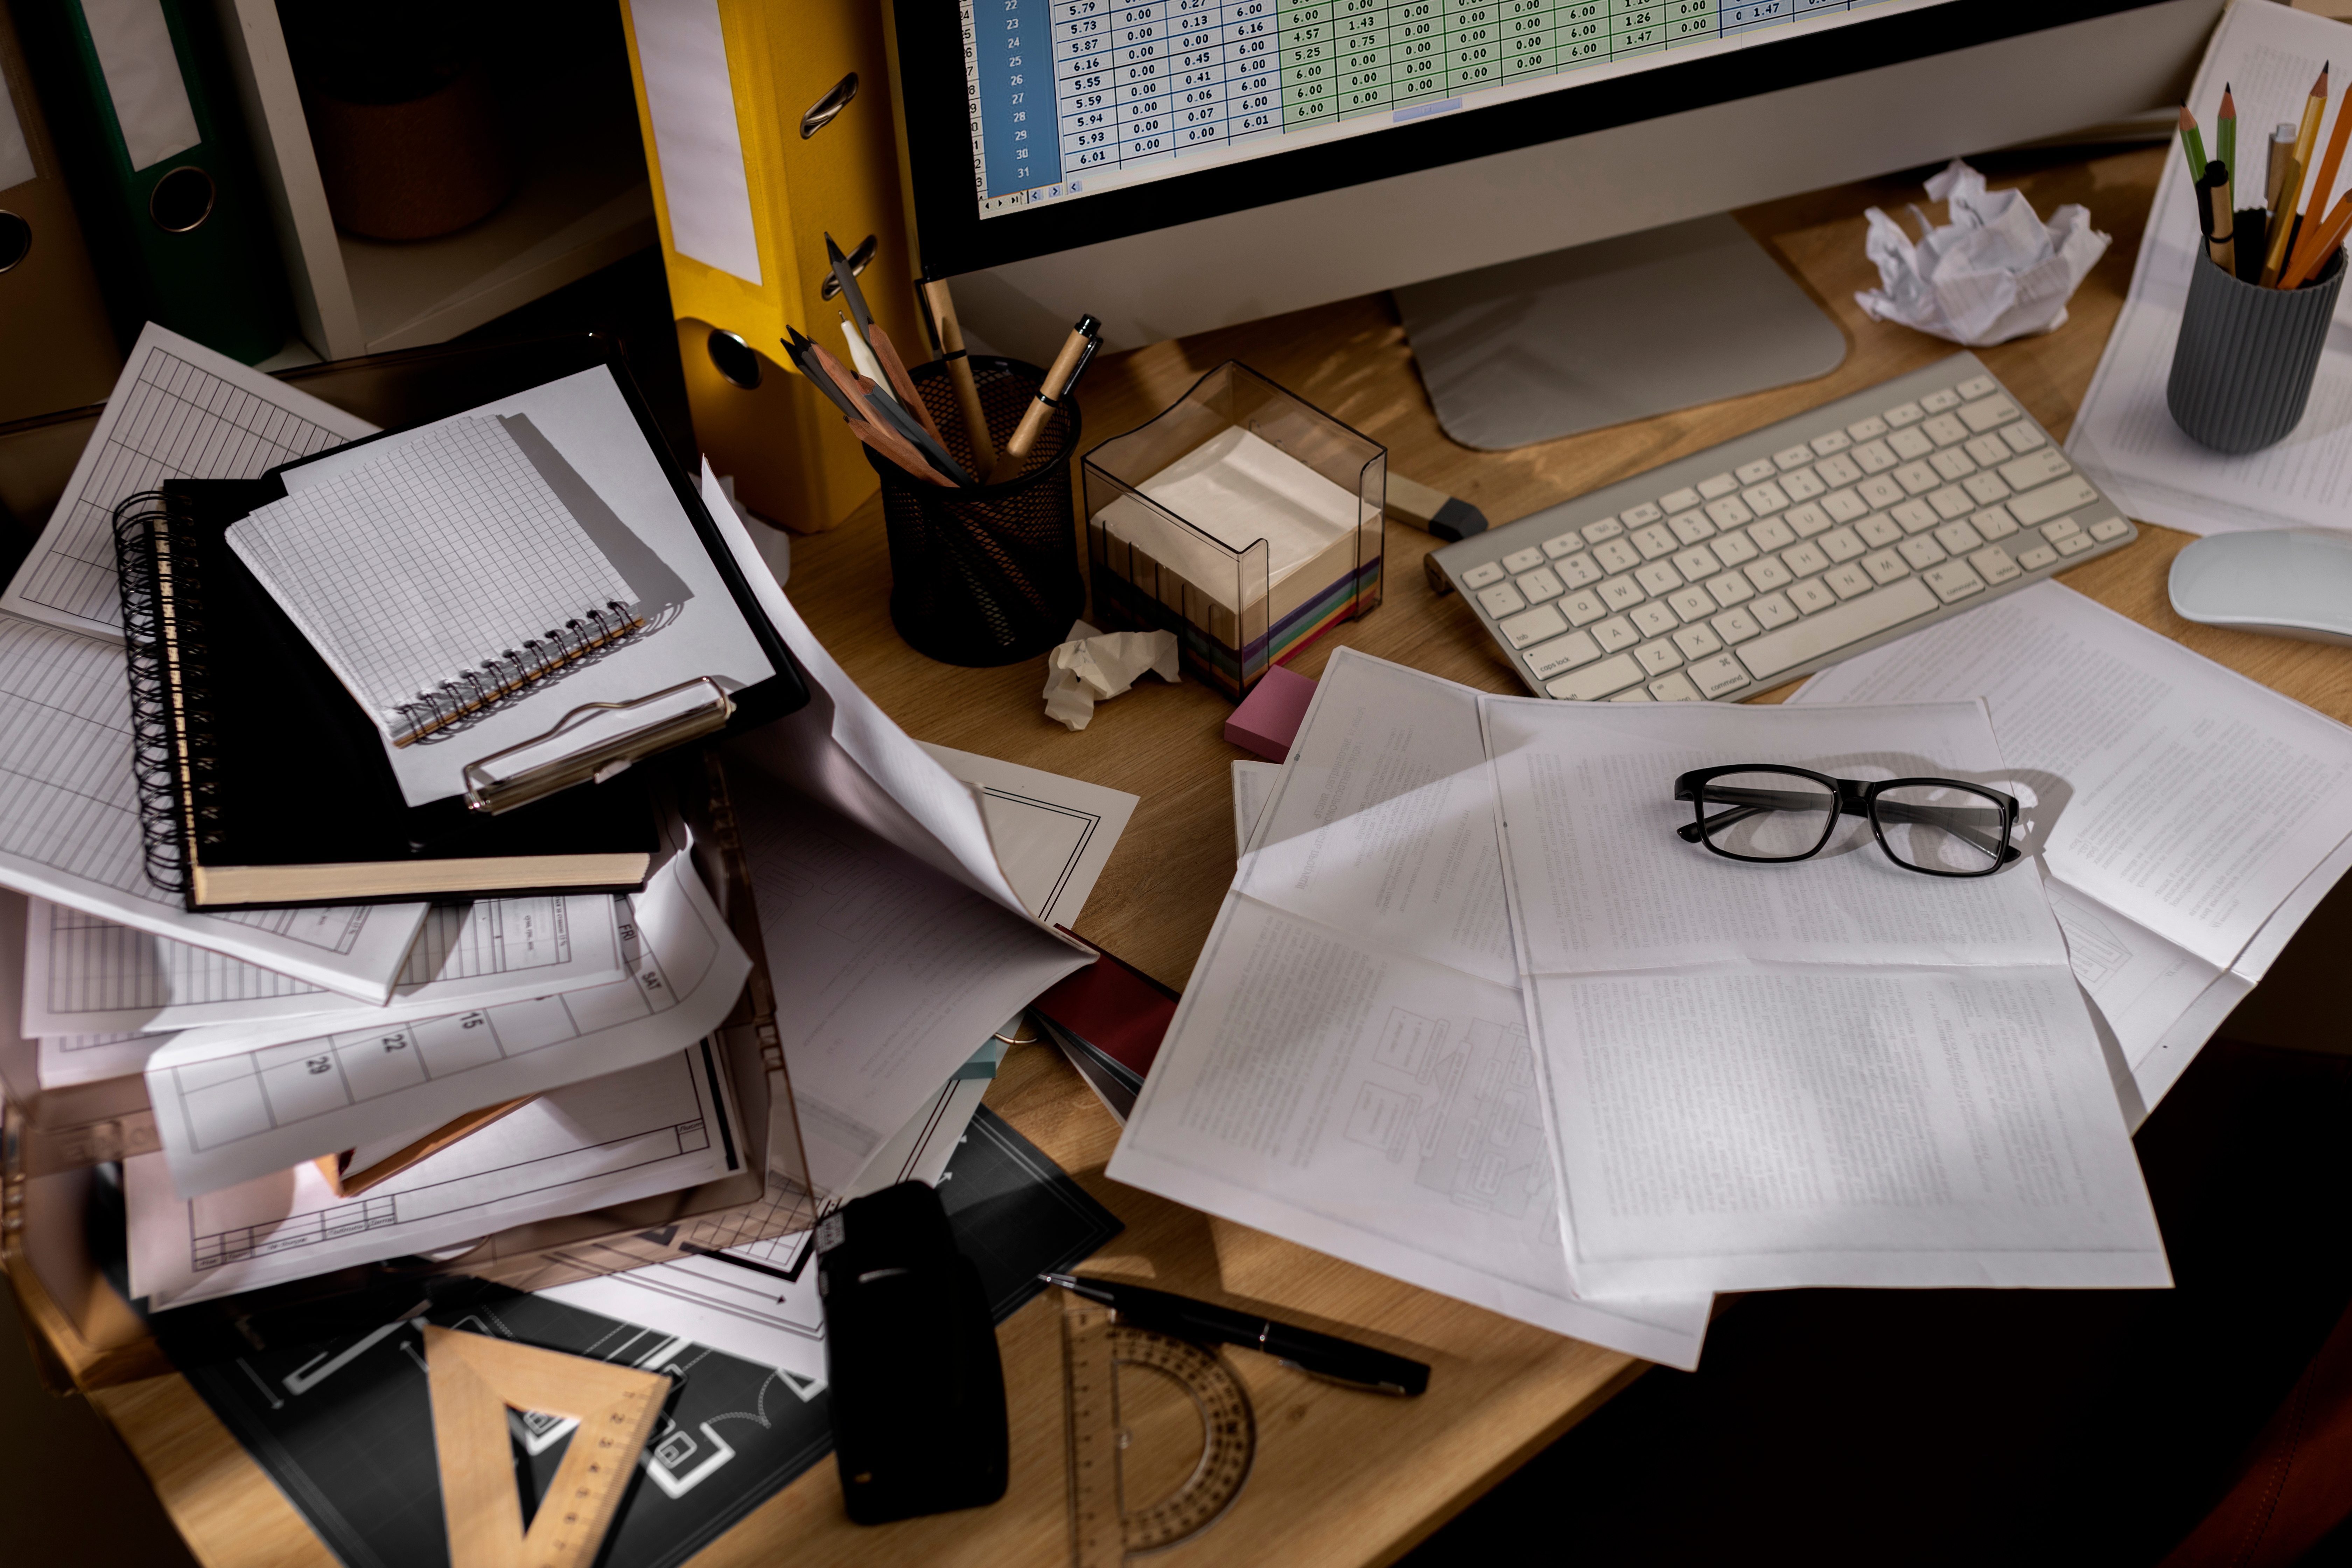 Messy office | Source: Shutterstock